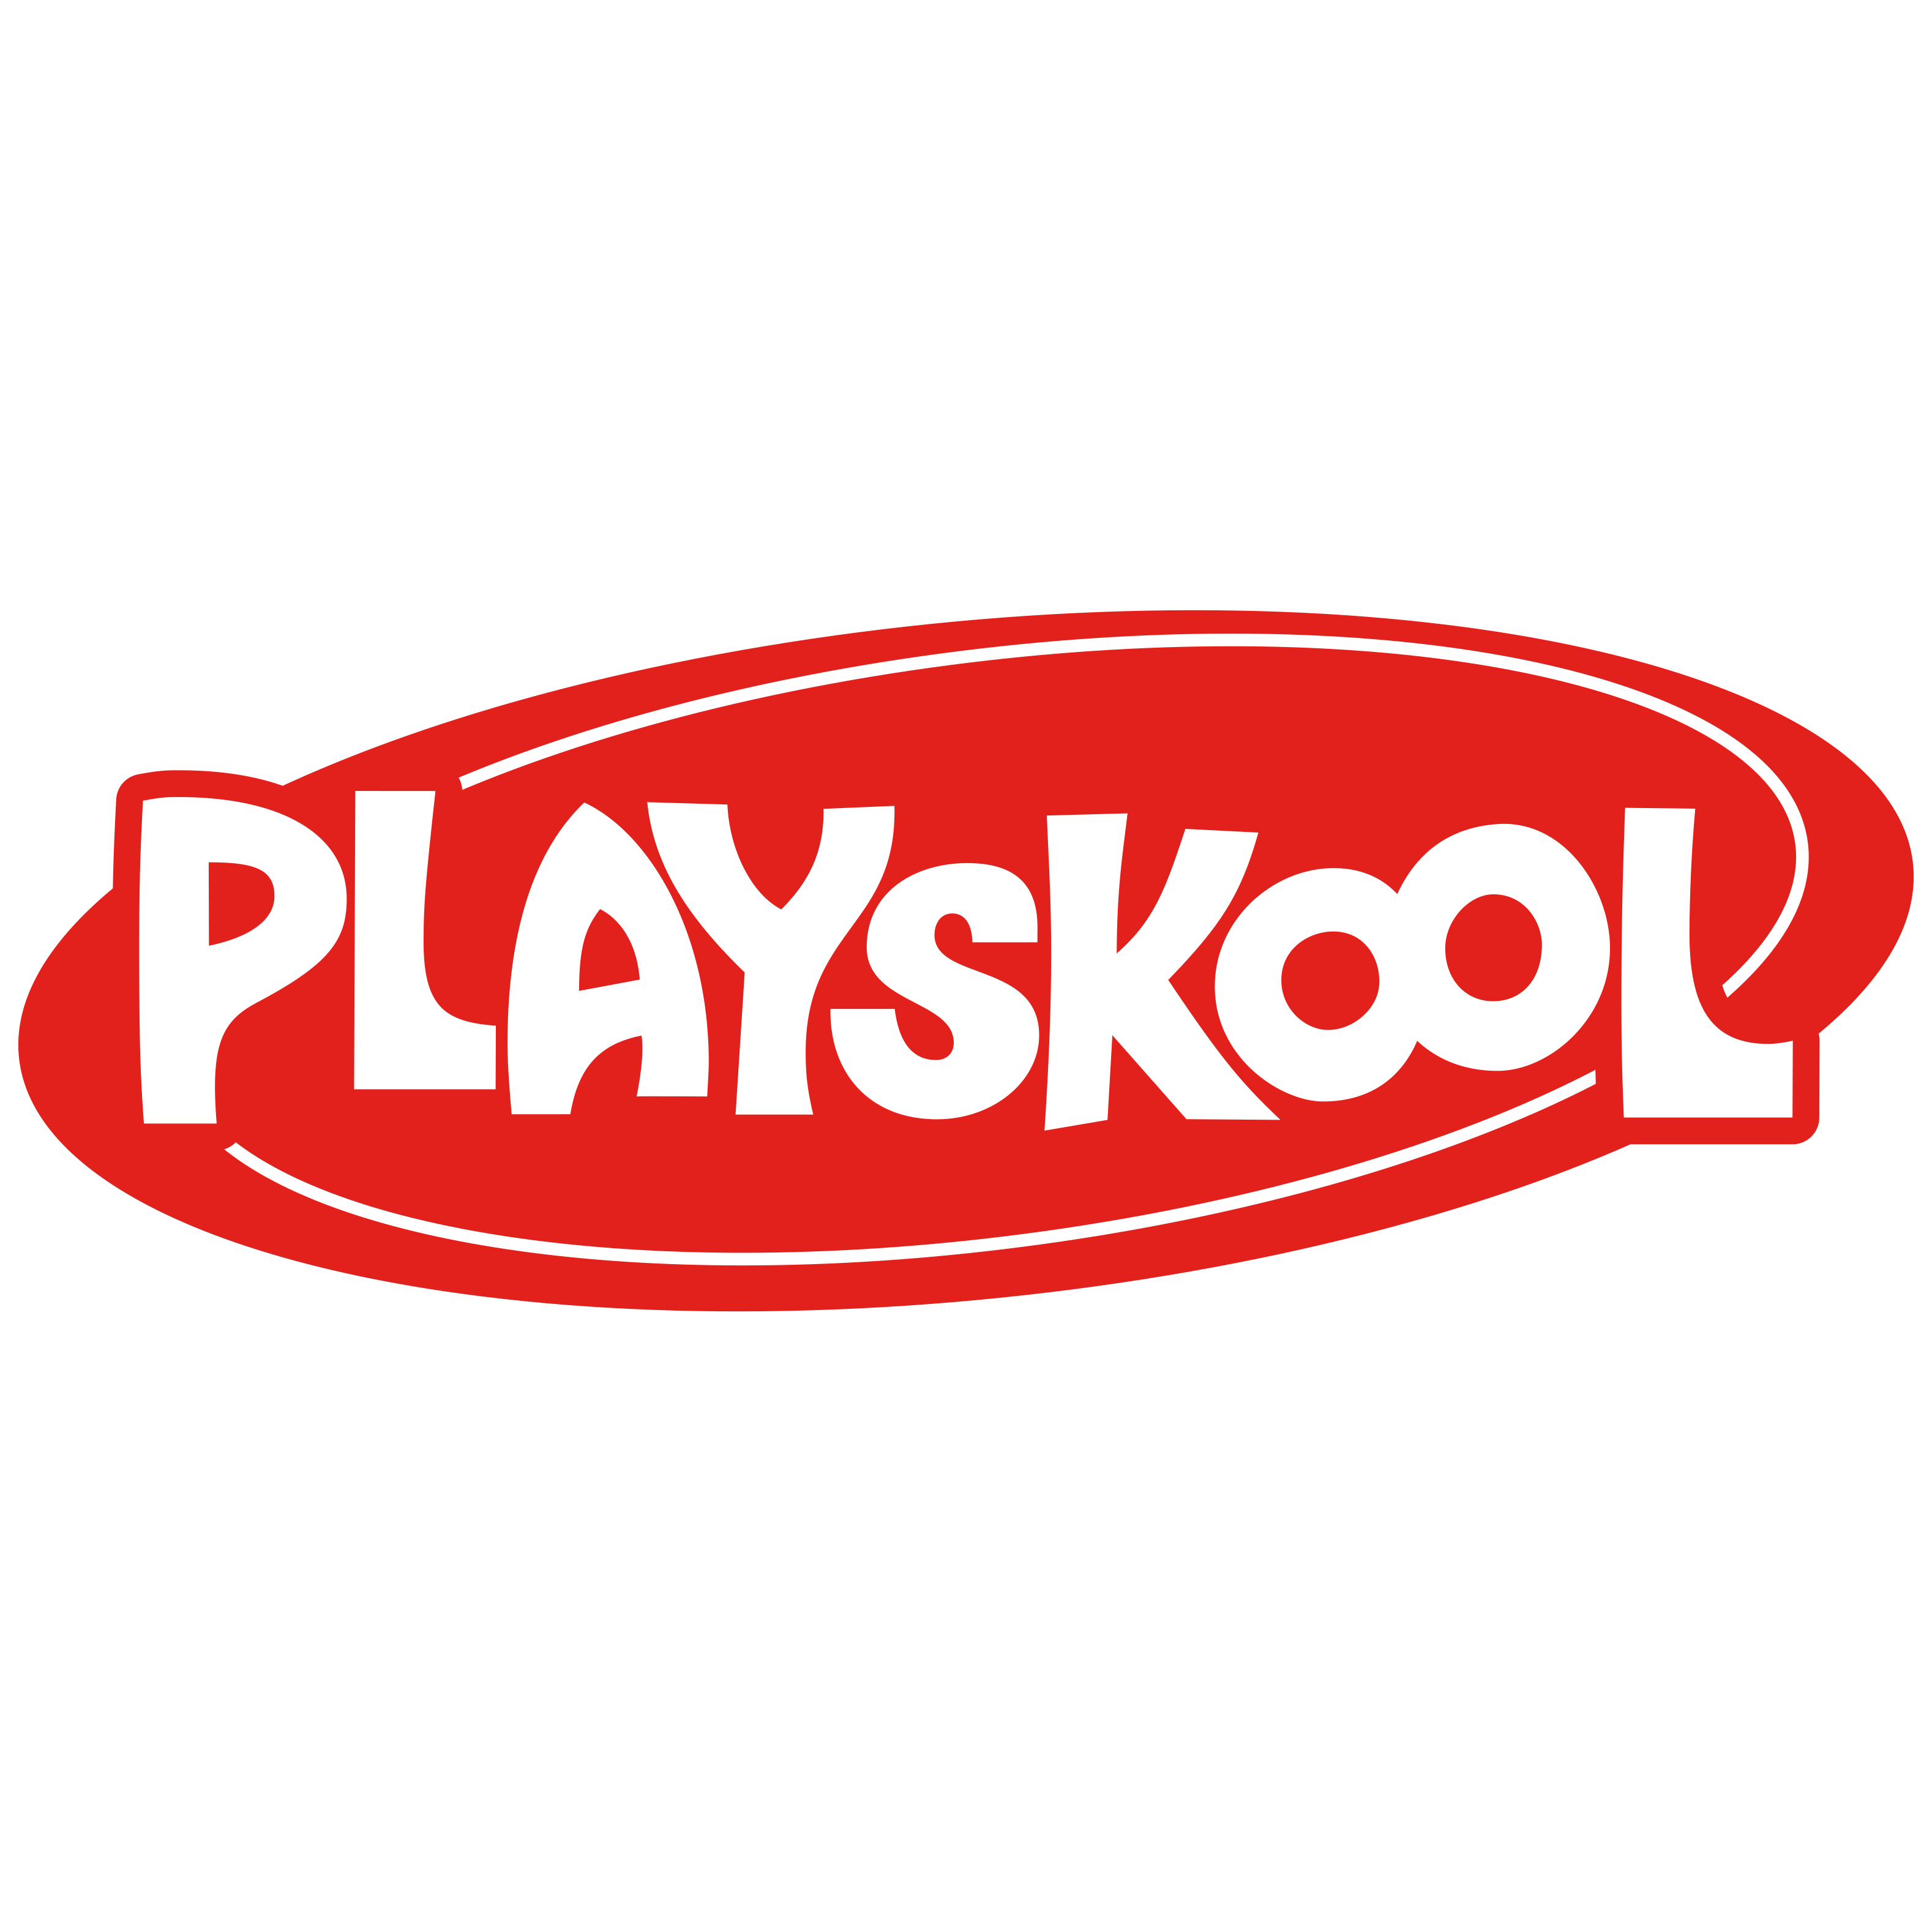 PLAYSKOOL logo